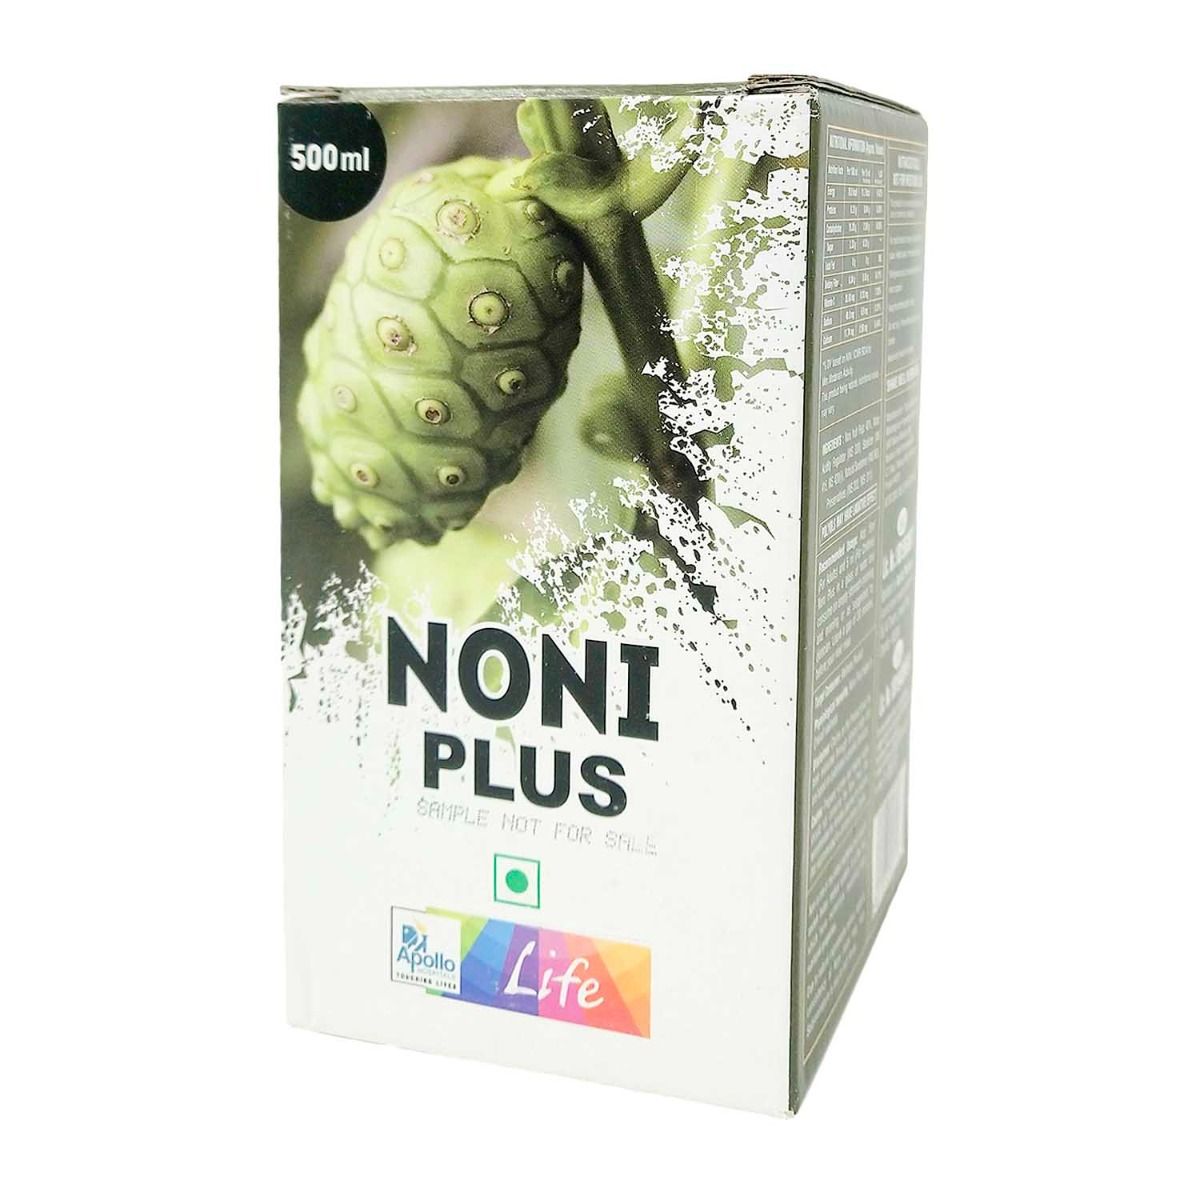 Buy Apollo Life Noni Plus Juice, 500 ml Online